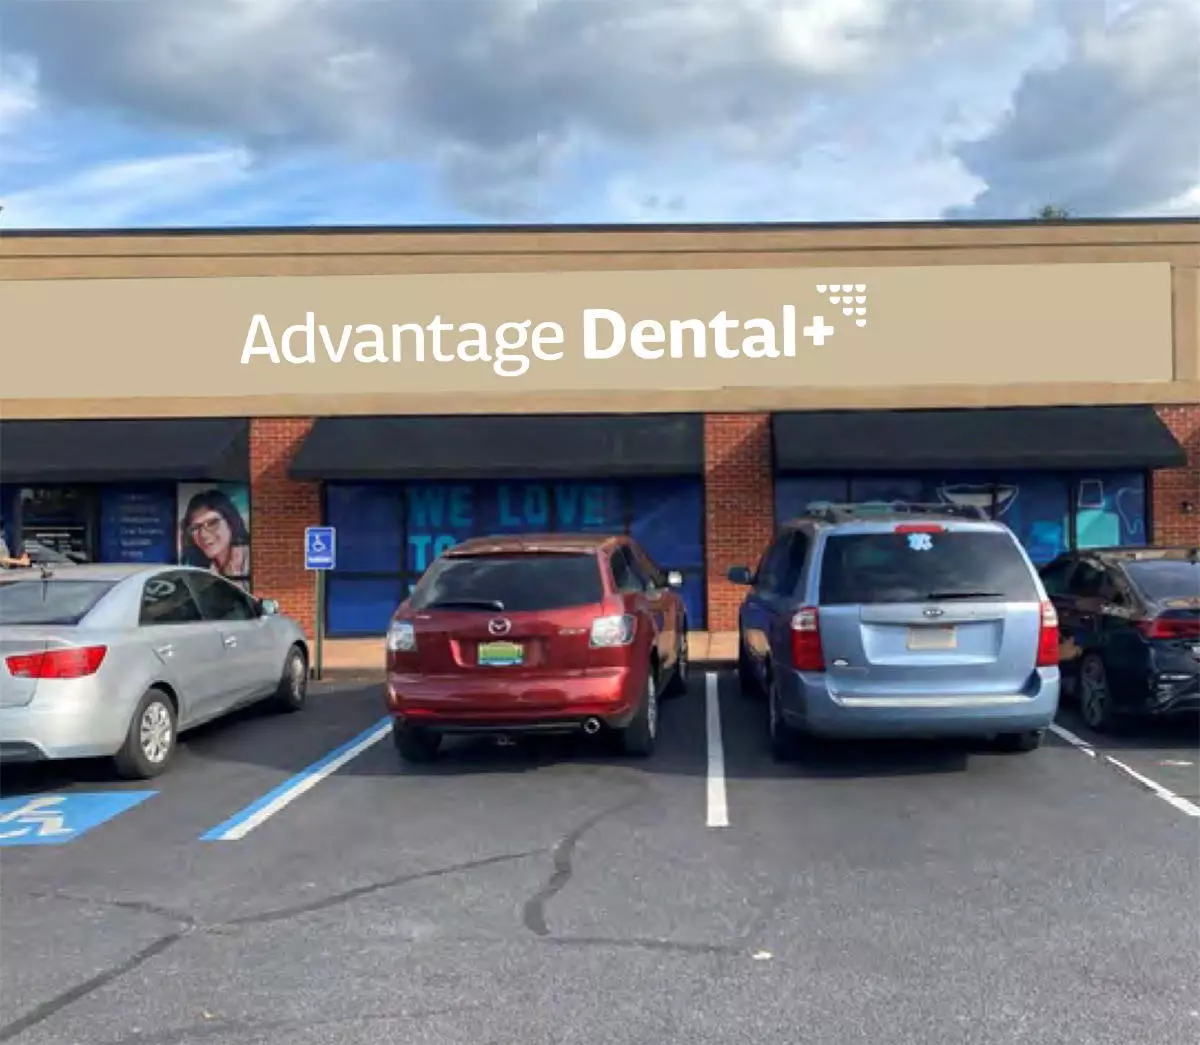 Advantage Dental+ Dothan Storefront.jpg